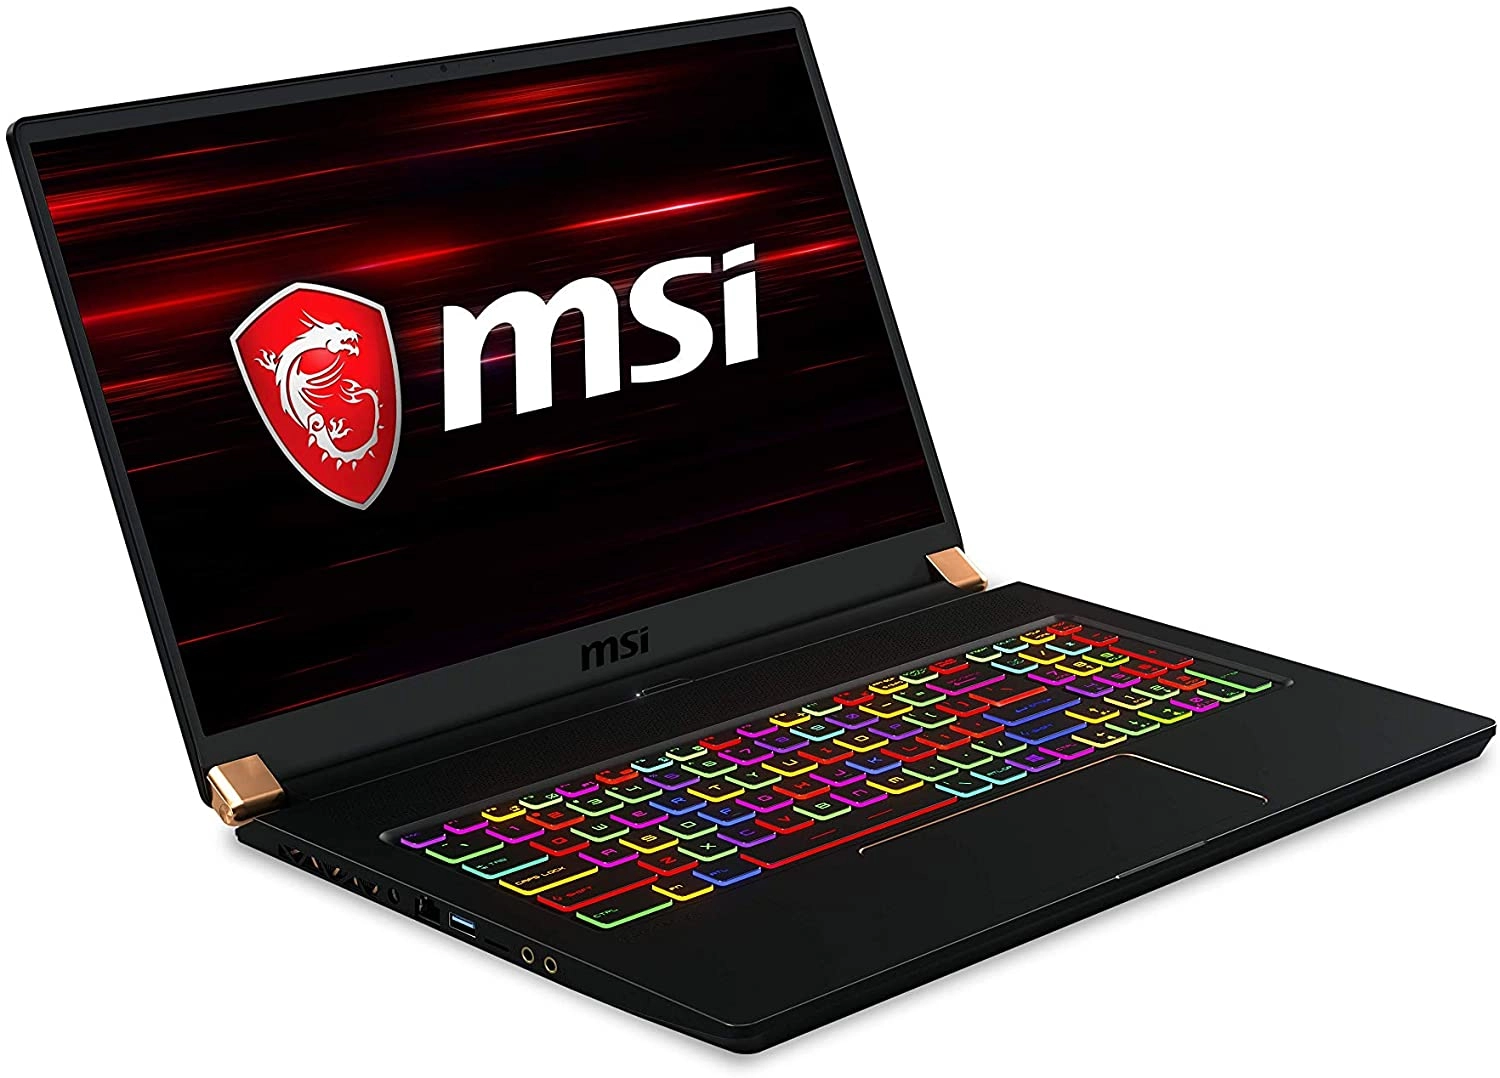 MSI GS75 Stealth 10SE-045ES laptop image